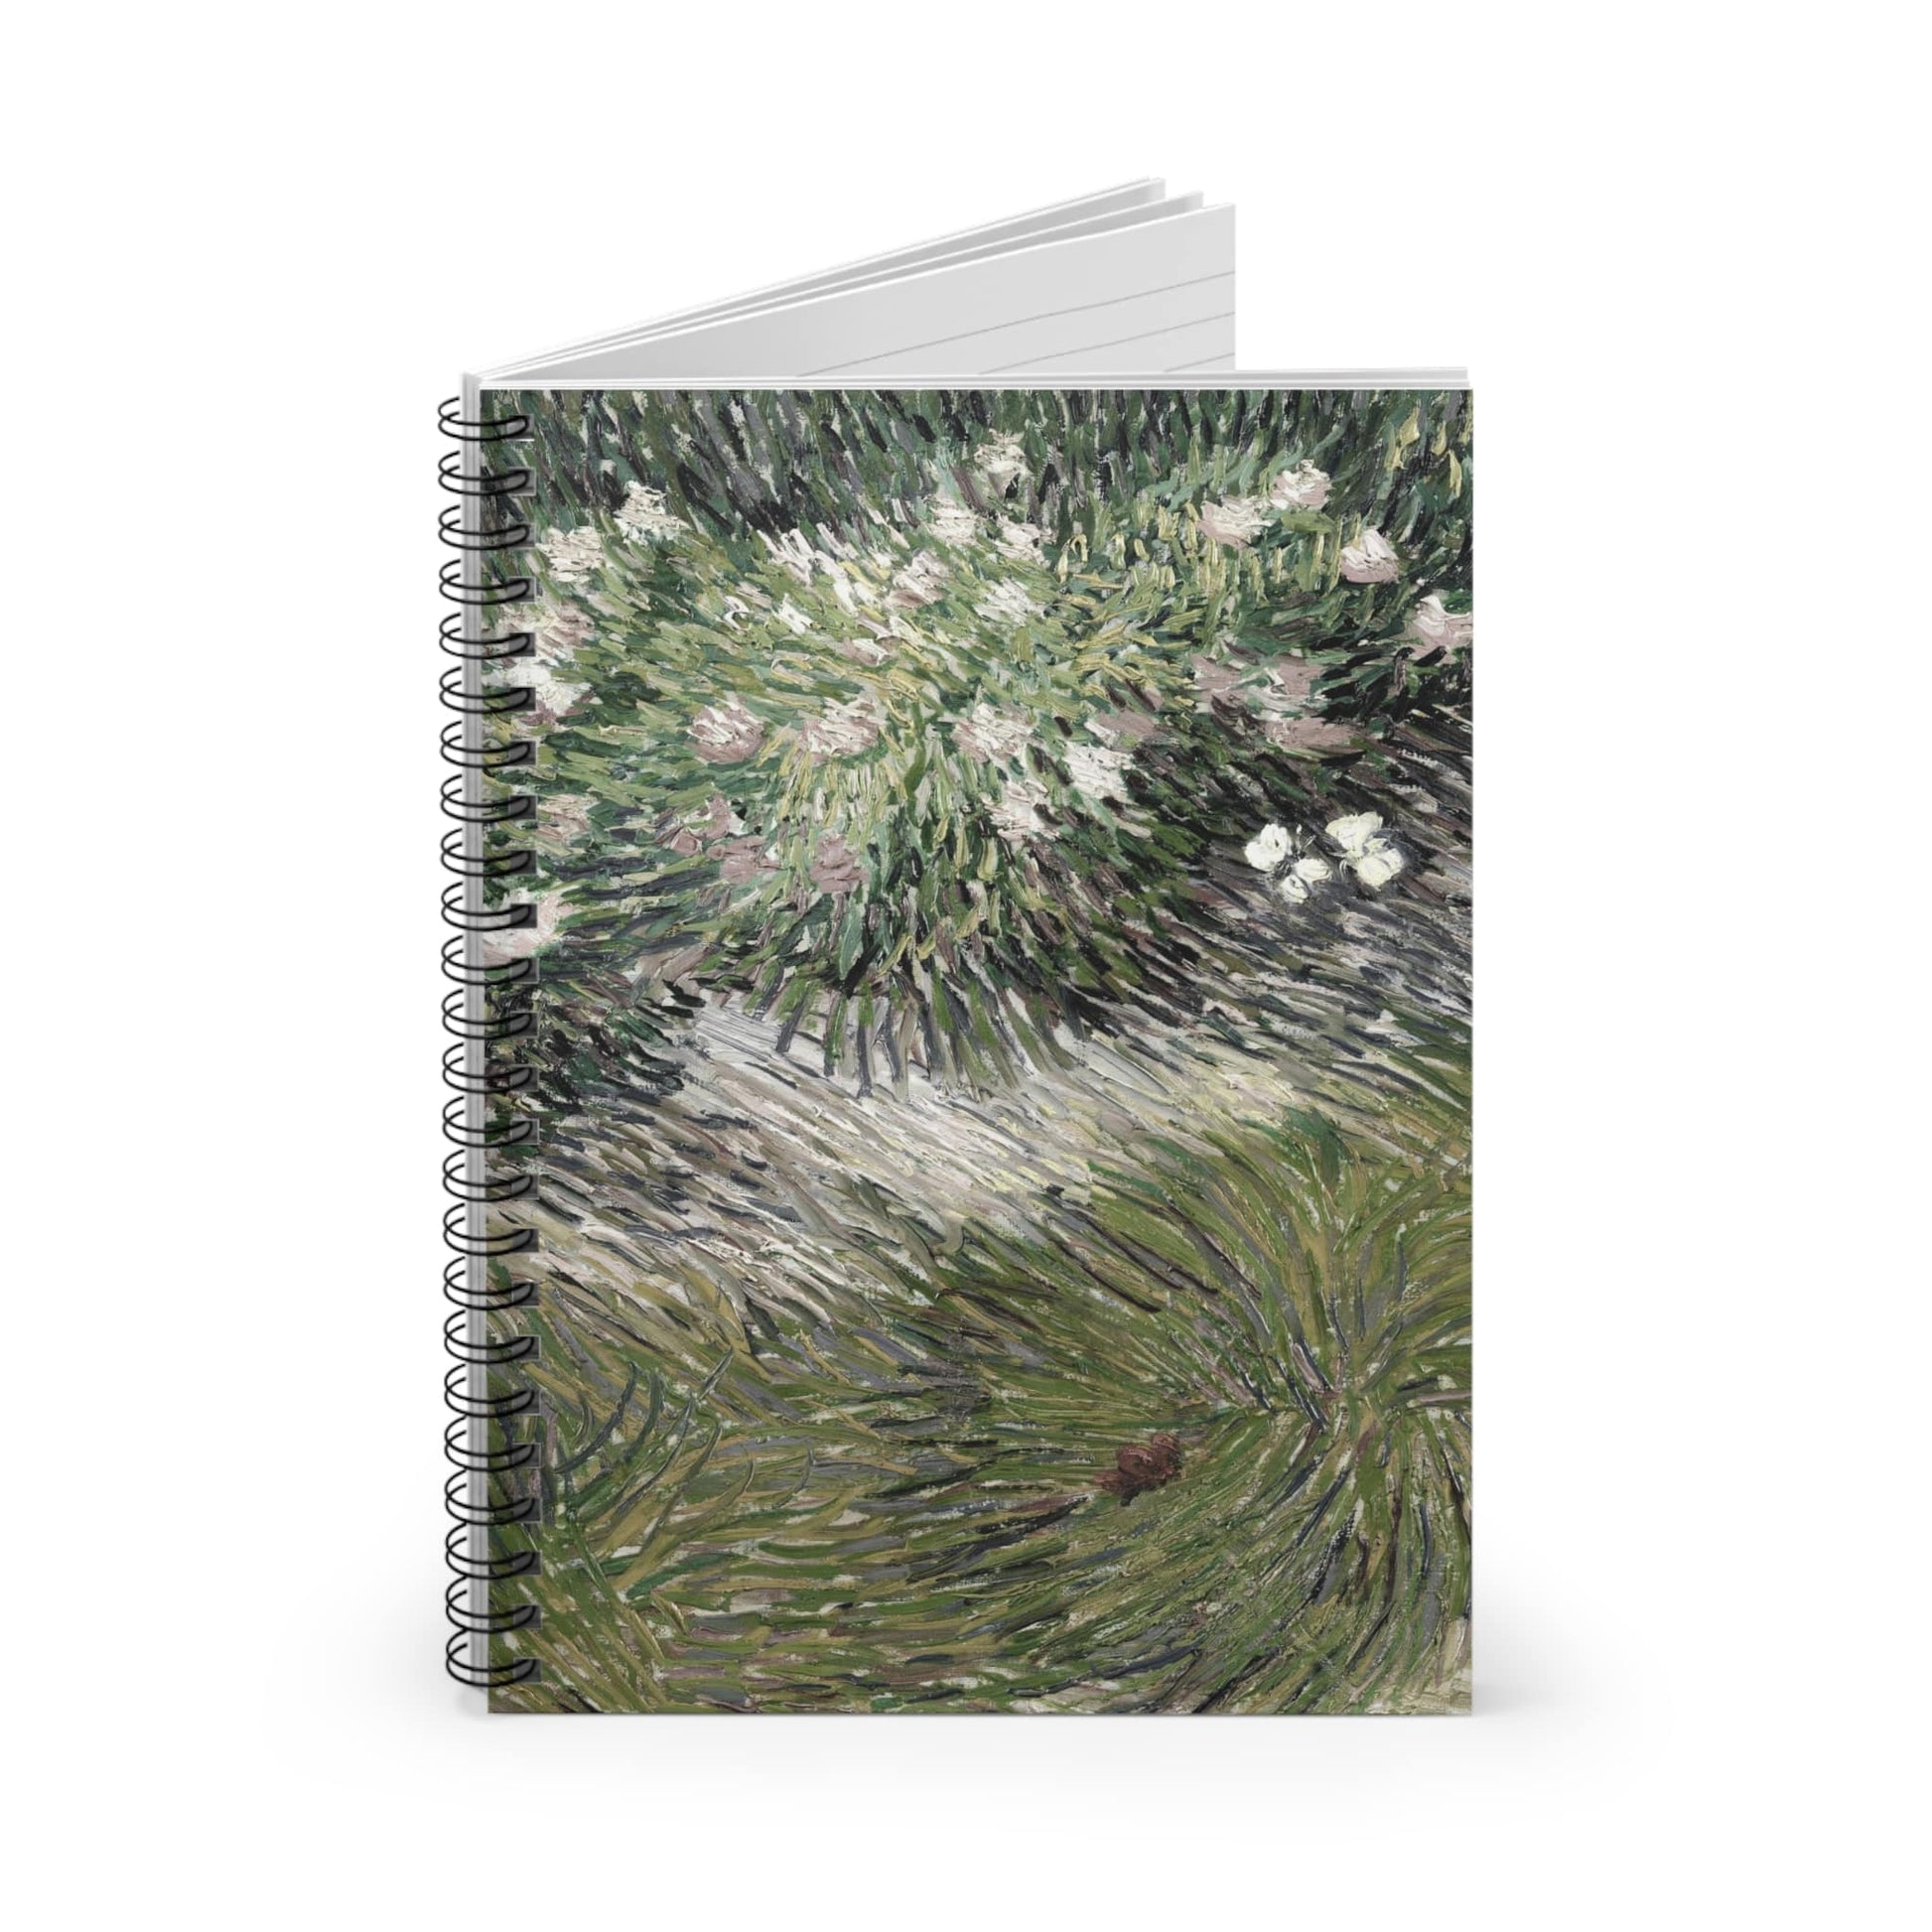 Abstract Garden Spiral Notebook Standing up on White Desk